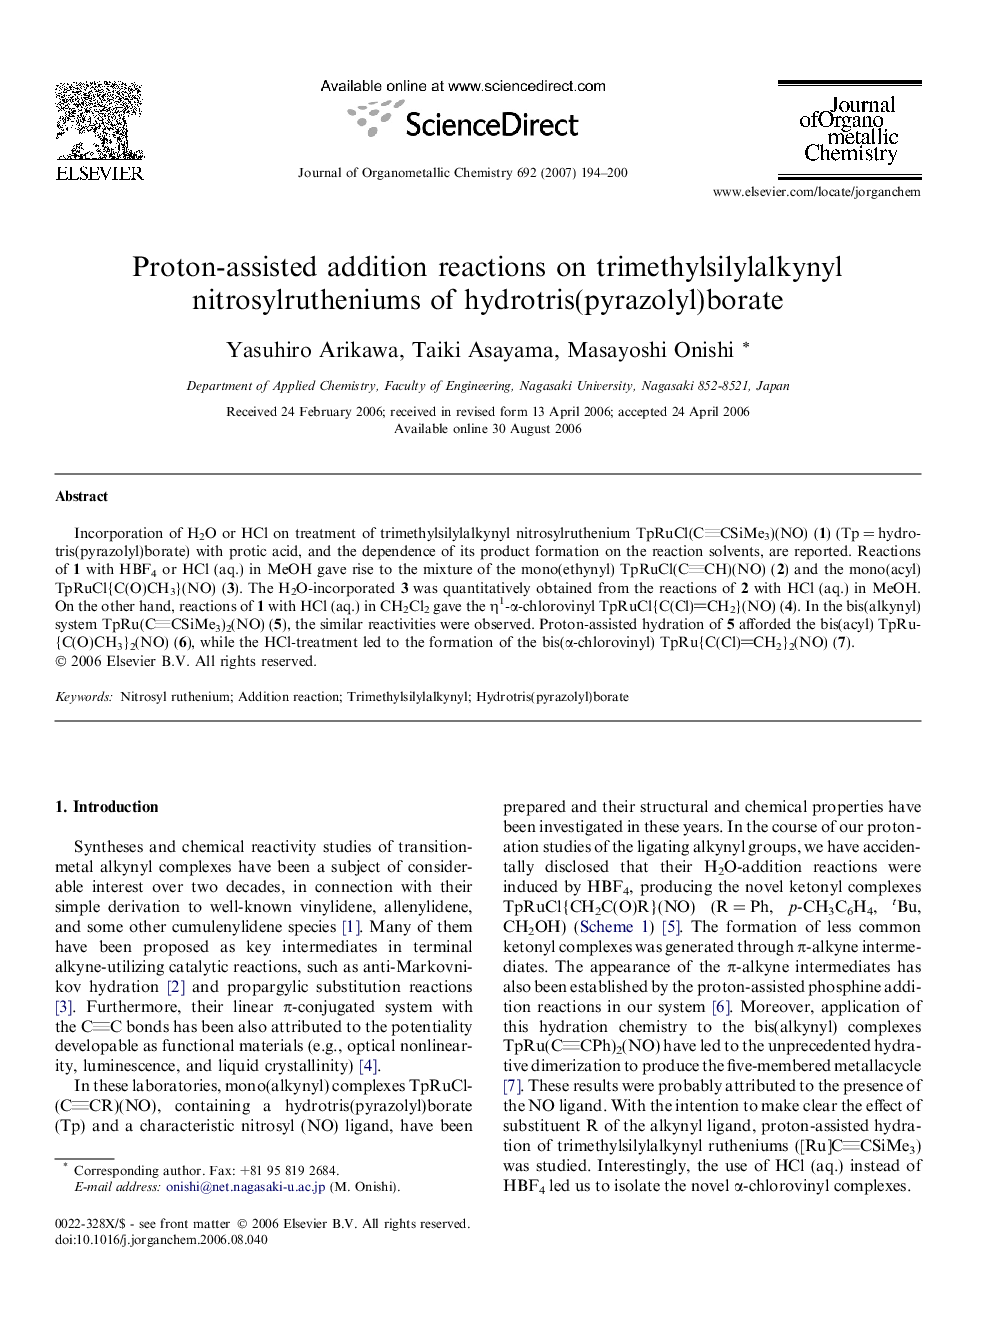 Proton-assisted addition reactions on trimethylsilylalkynyl nitrosylrutheniums of hydrotris(pyrazolyl)borate